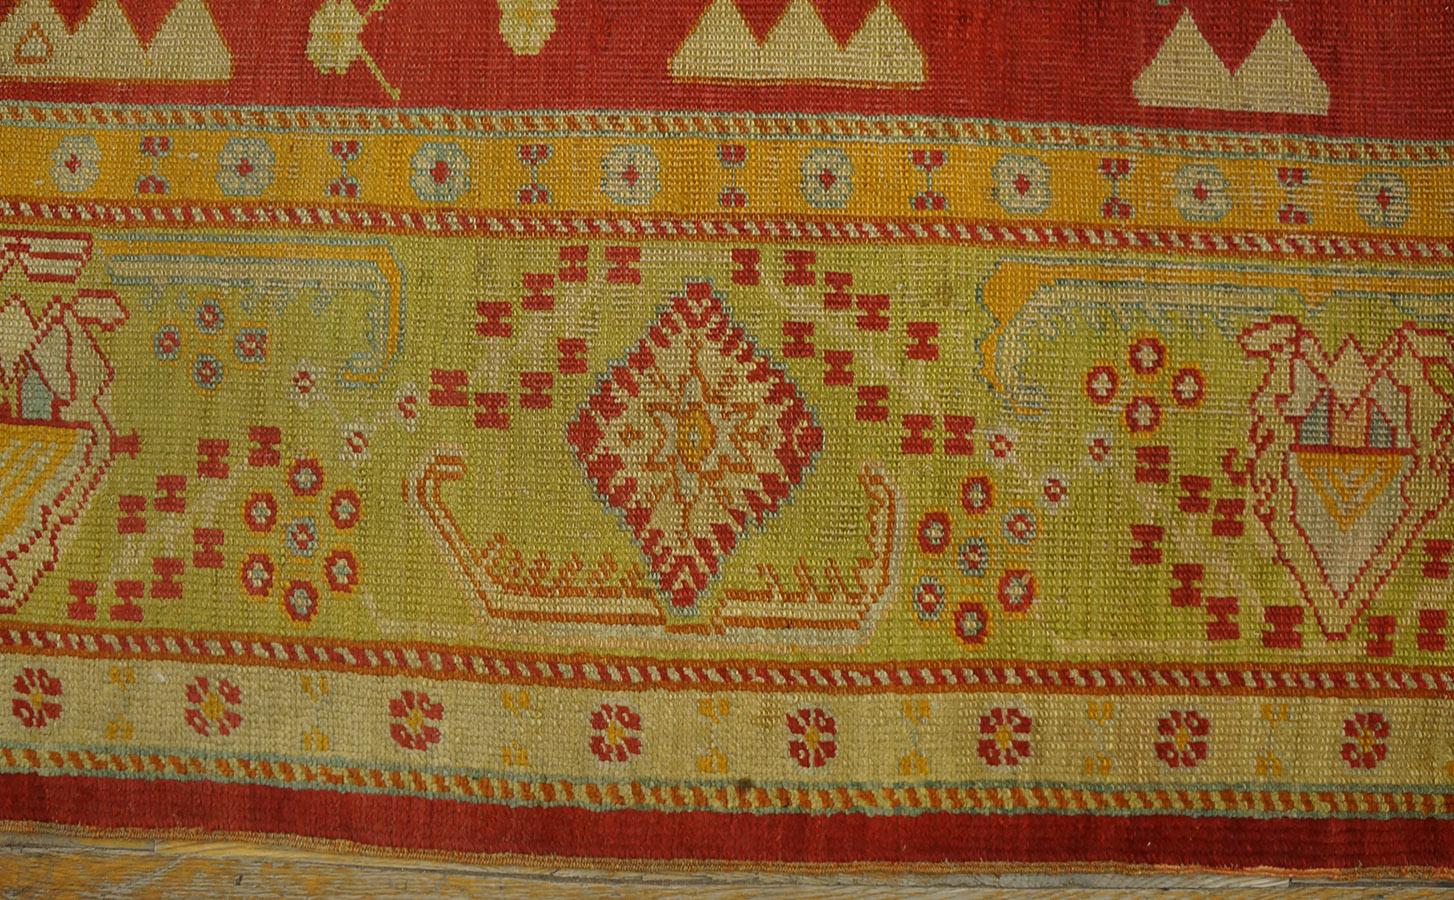 Late 19th Century Turkish Oushak  Carpet ( 9' x 12' - 270 x 365 cm )  For Sale 4